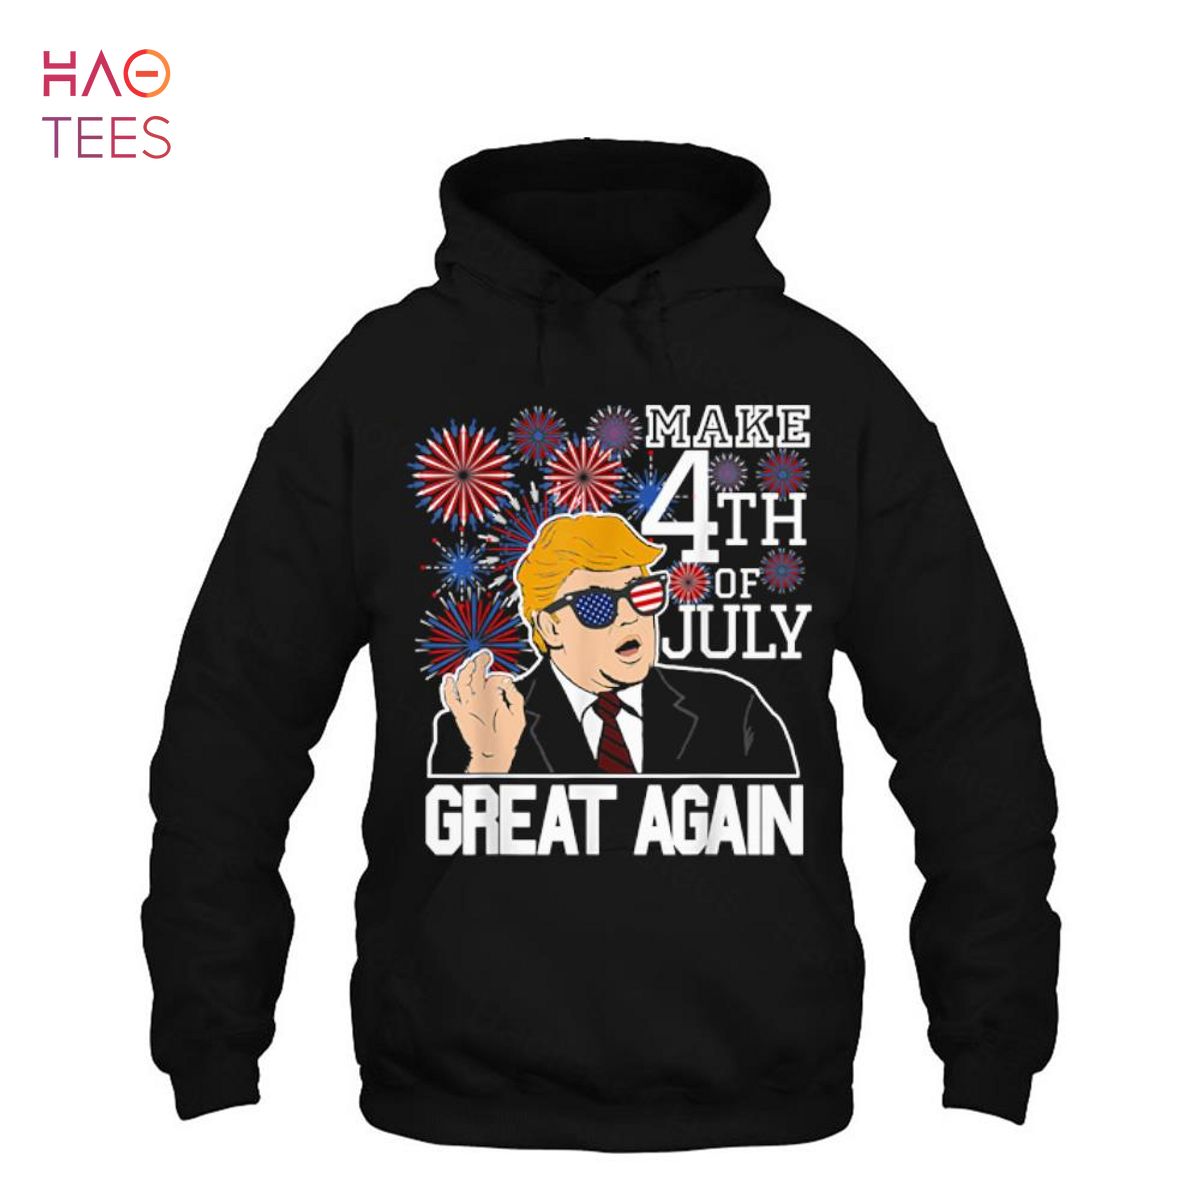 Make 4th of July Great Again Donald Trump, Pro-Trump Shirt